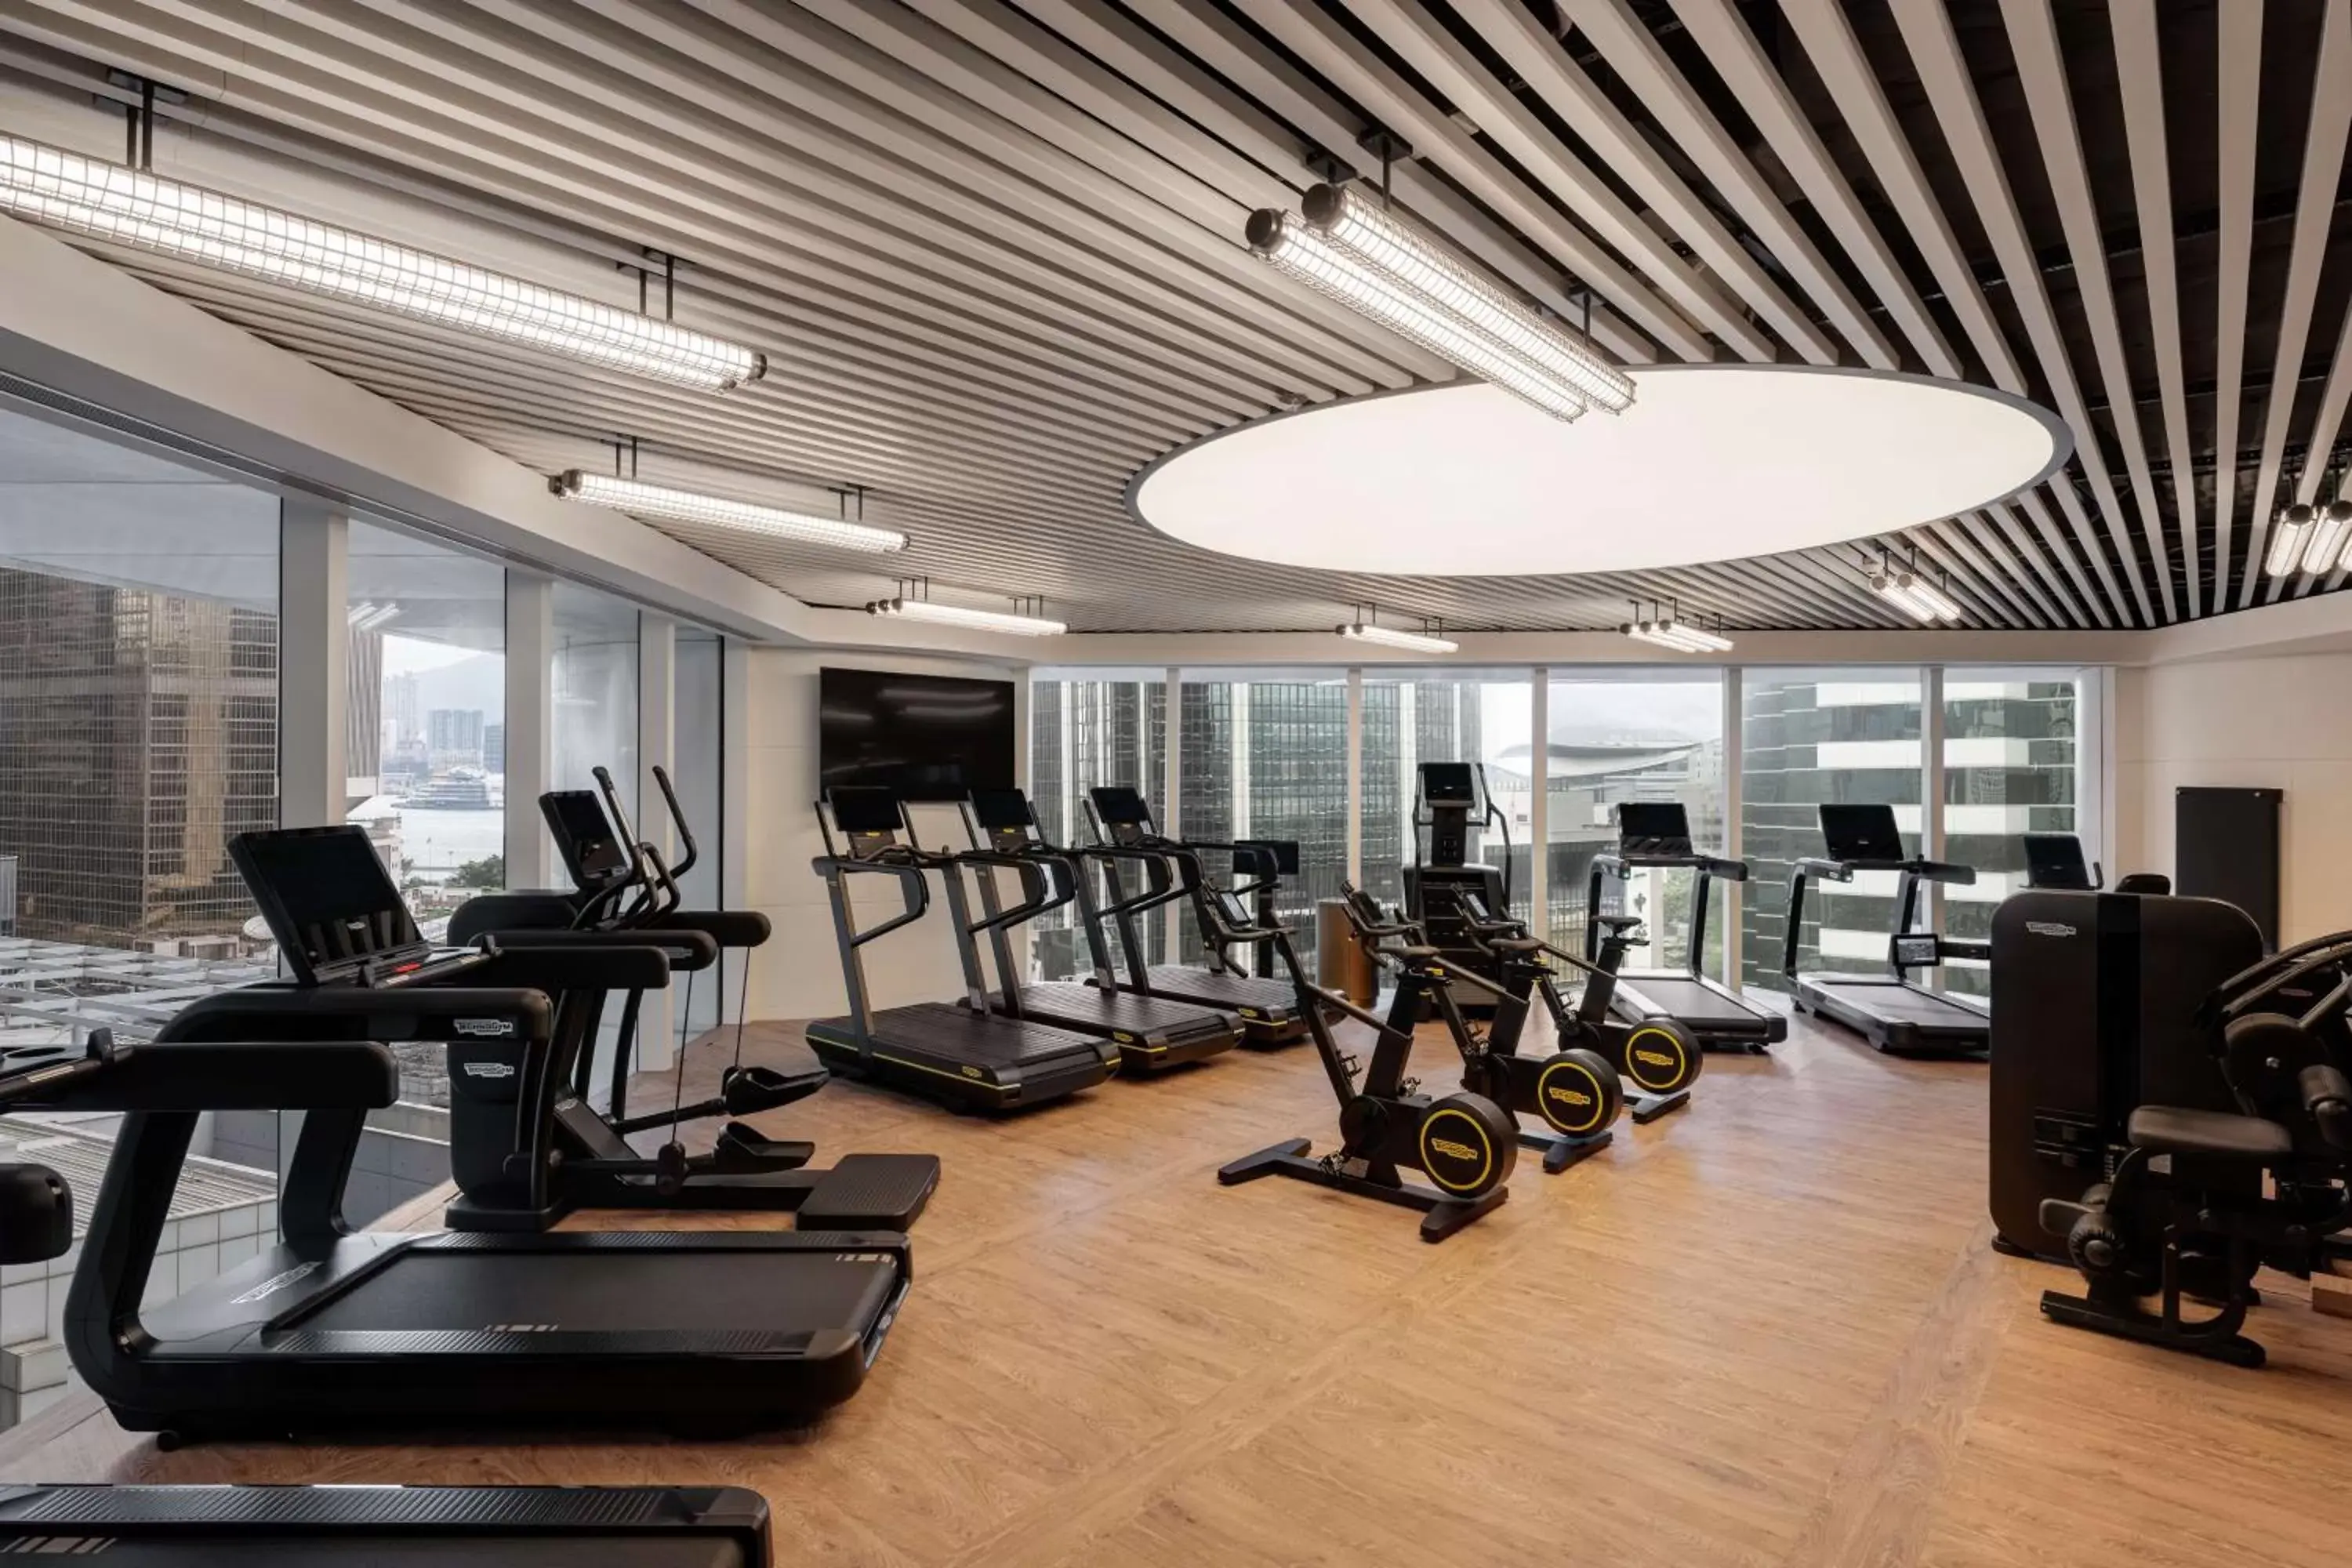 Fitness centre/facilities, Fitness Center/Facilities in Island Shangri-La, Hong Kong